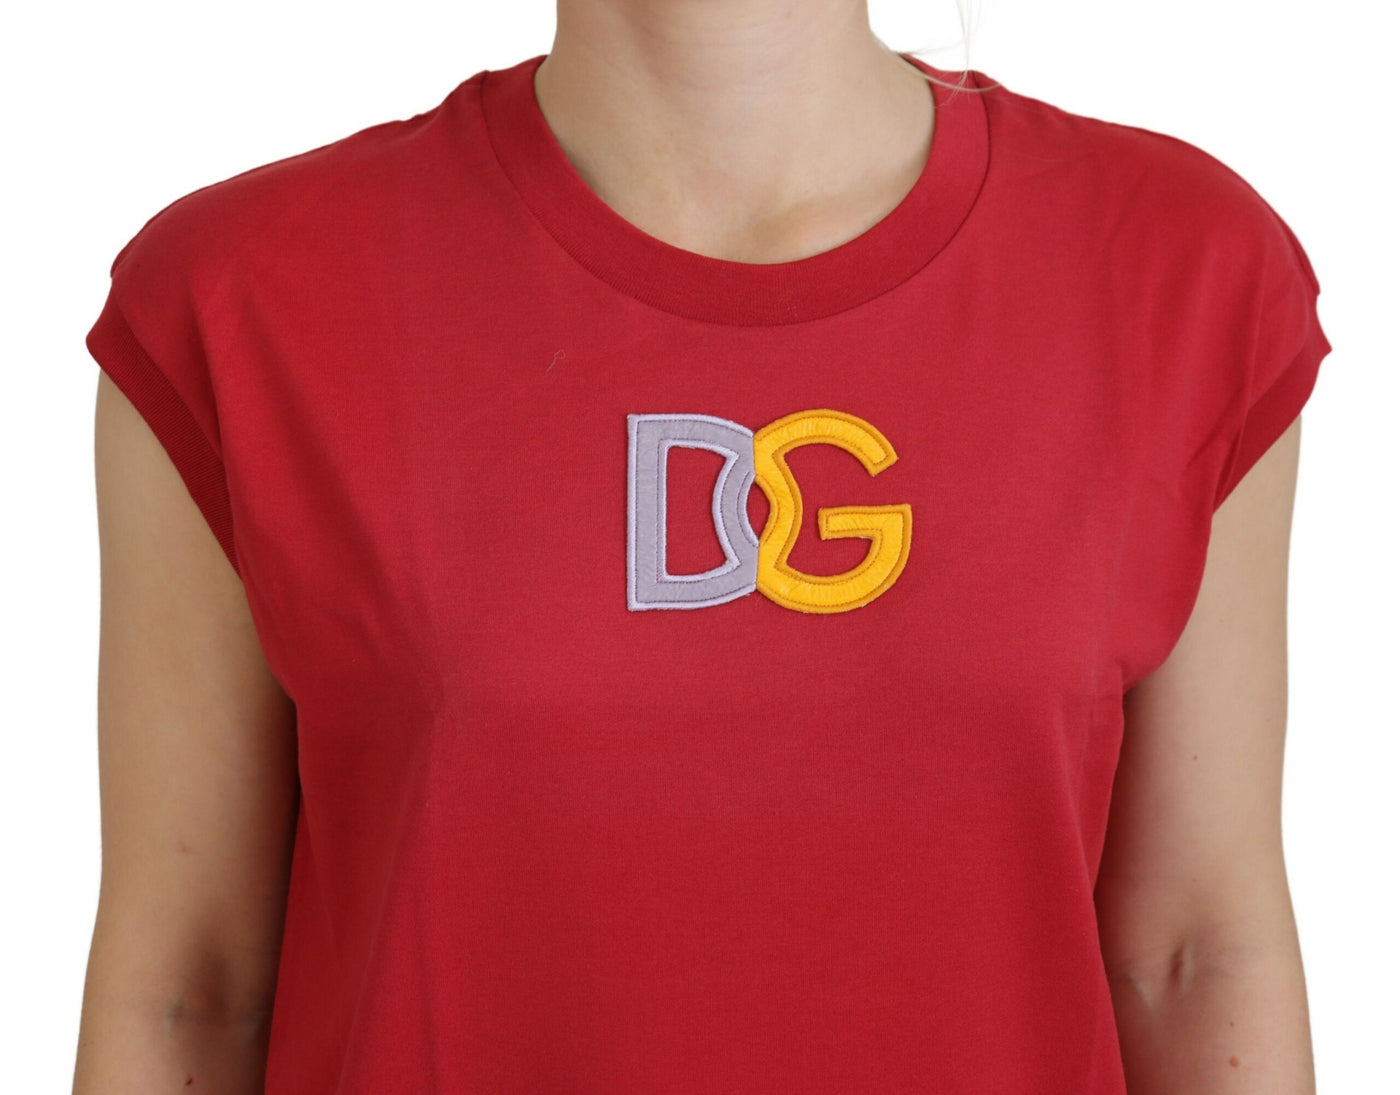 Red Cotton DG Logo Tank Top T-shirt